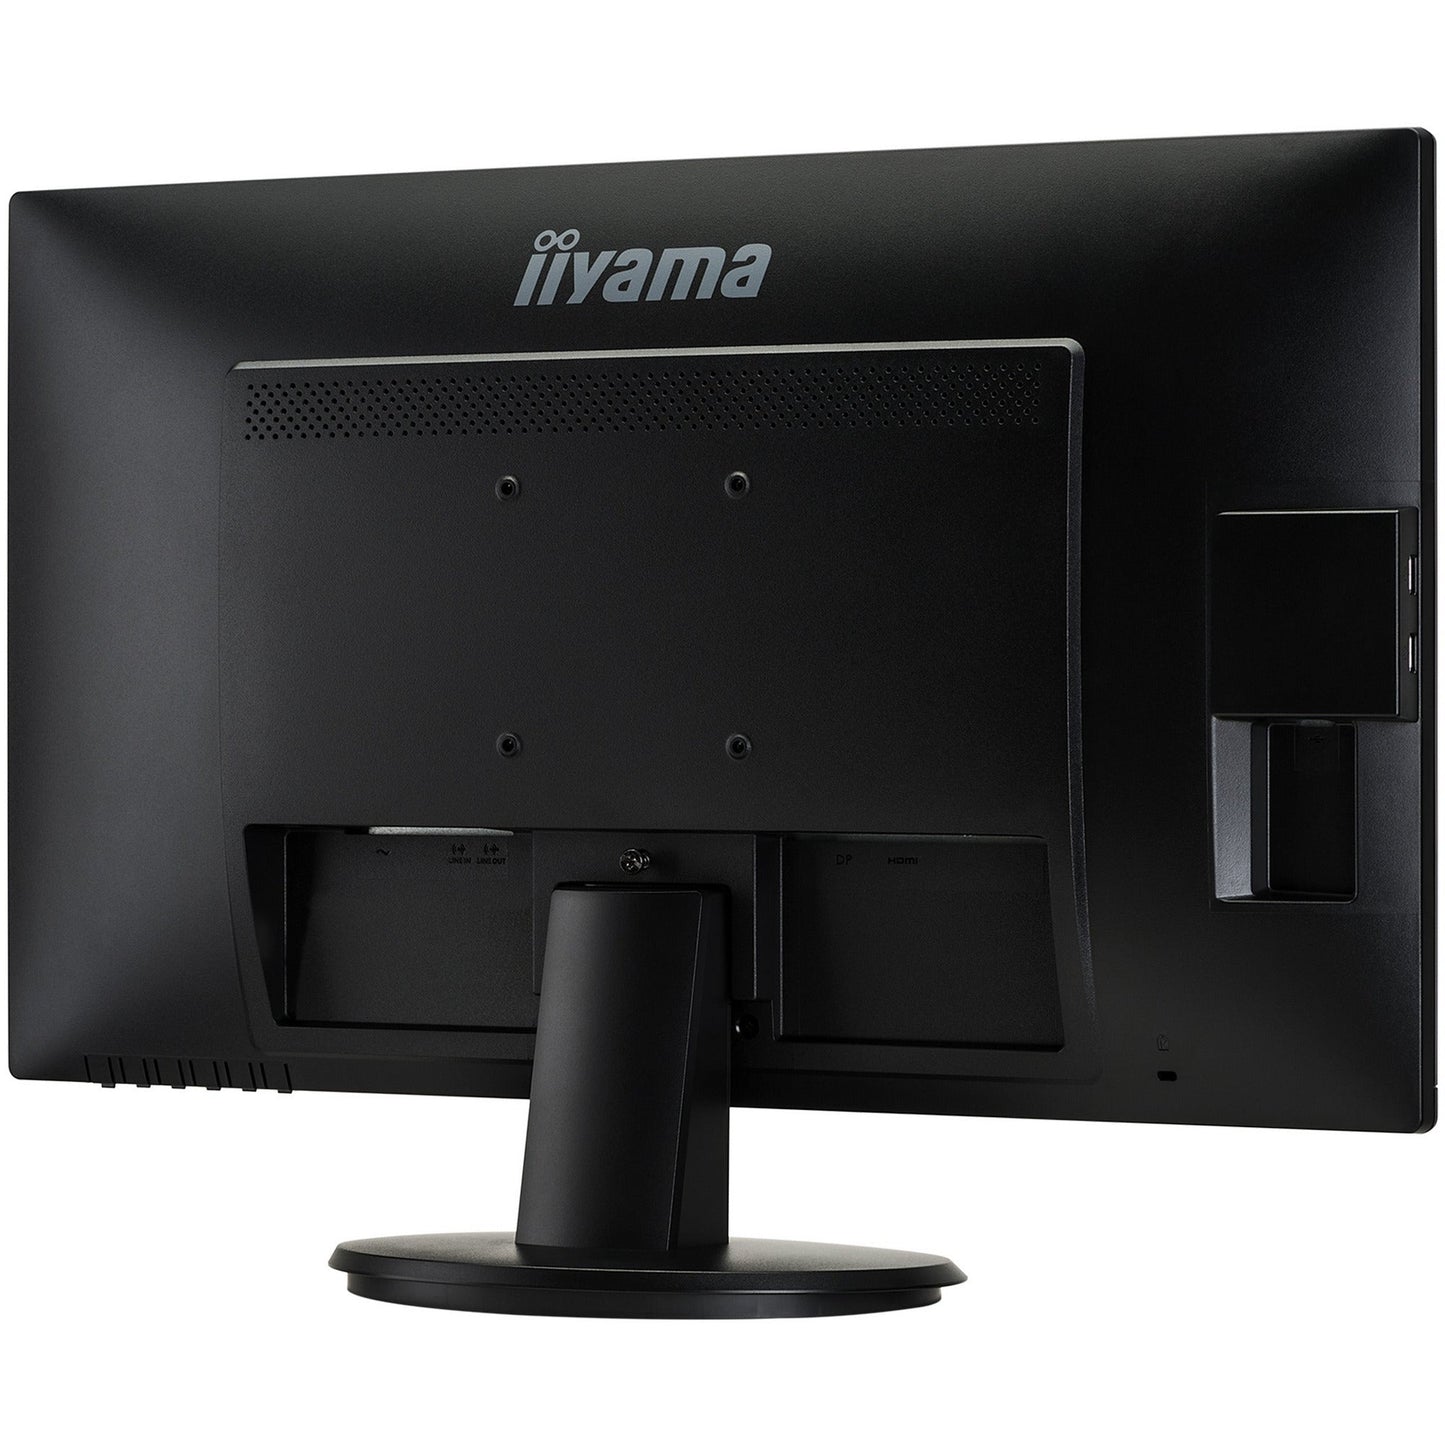 Black iiyama ProLite X2483HSU-B5 24" LED Display